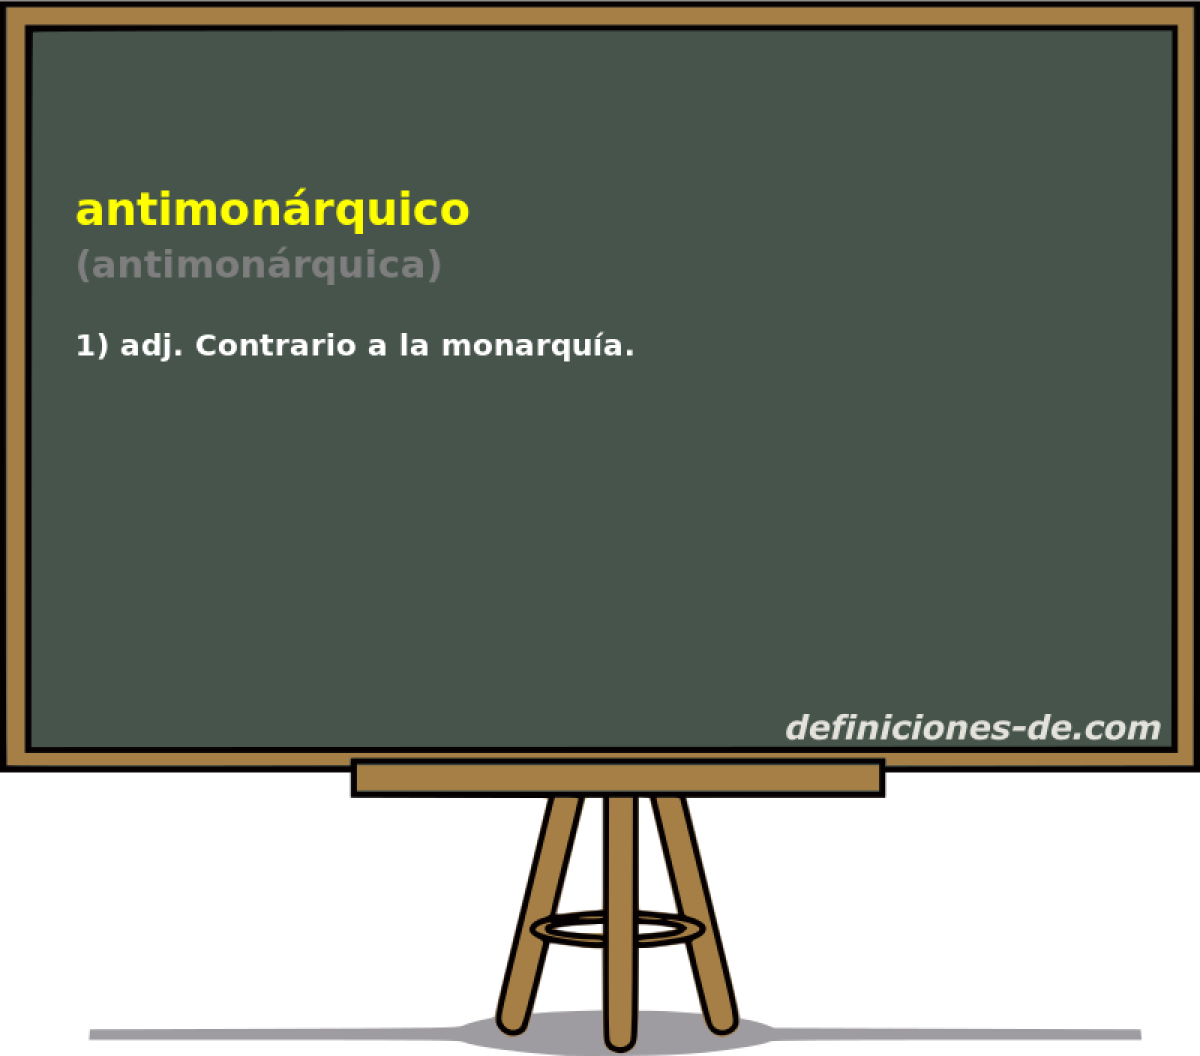 antimonrquico (antimonrquica)